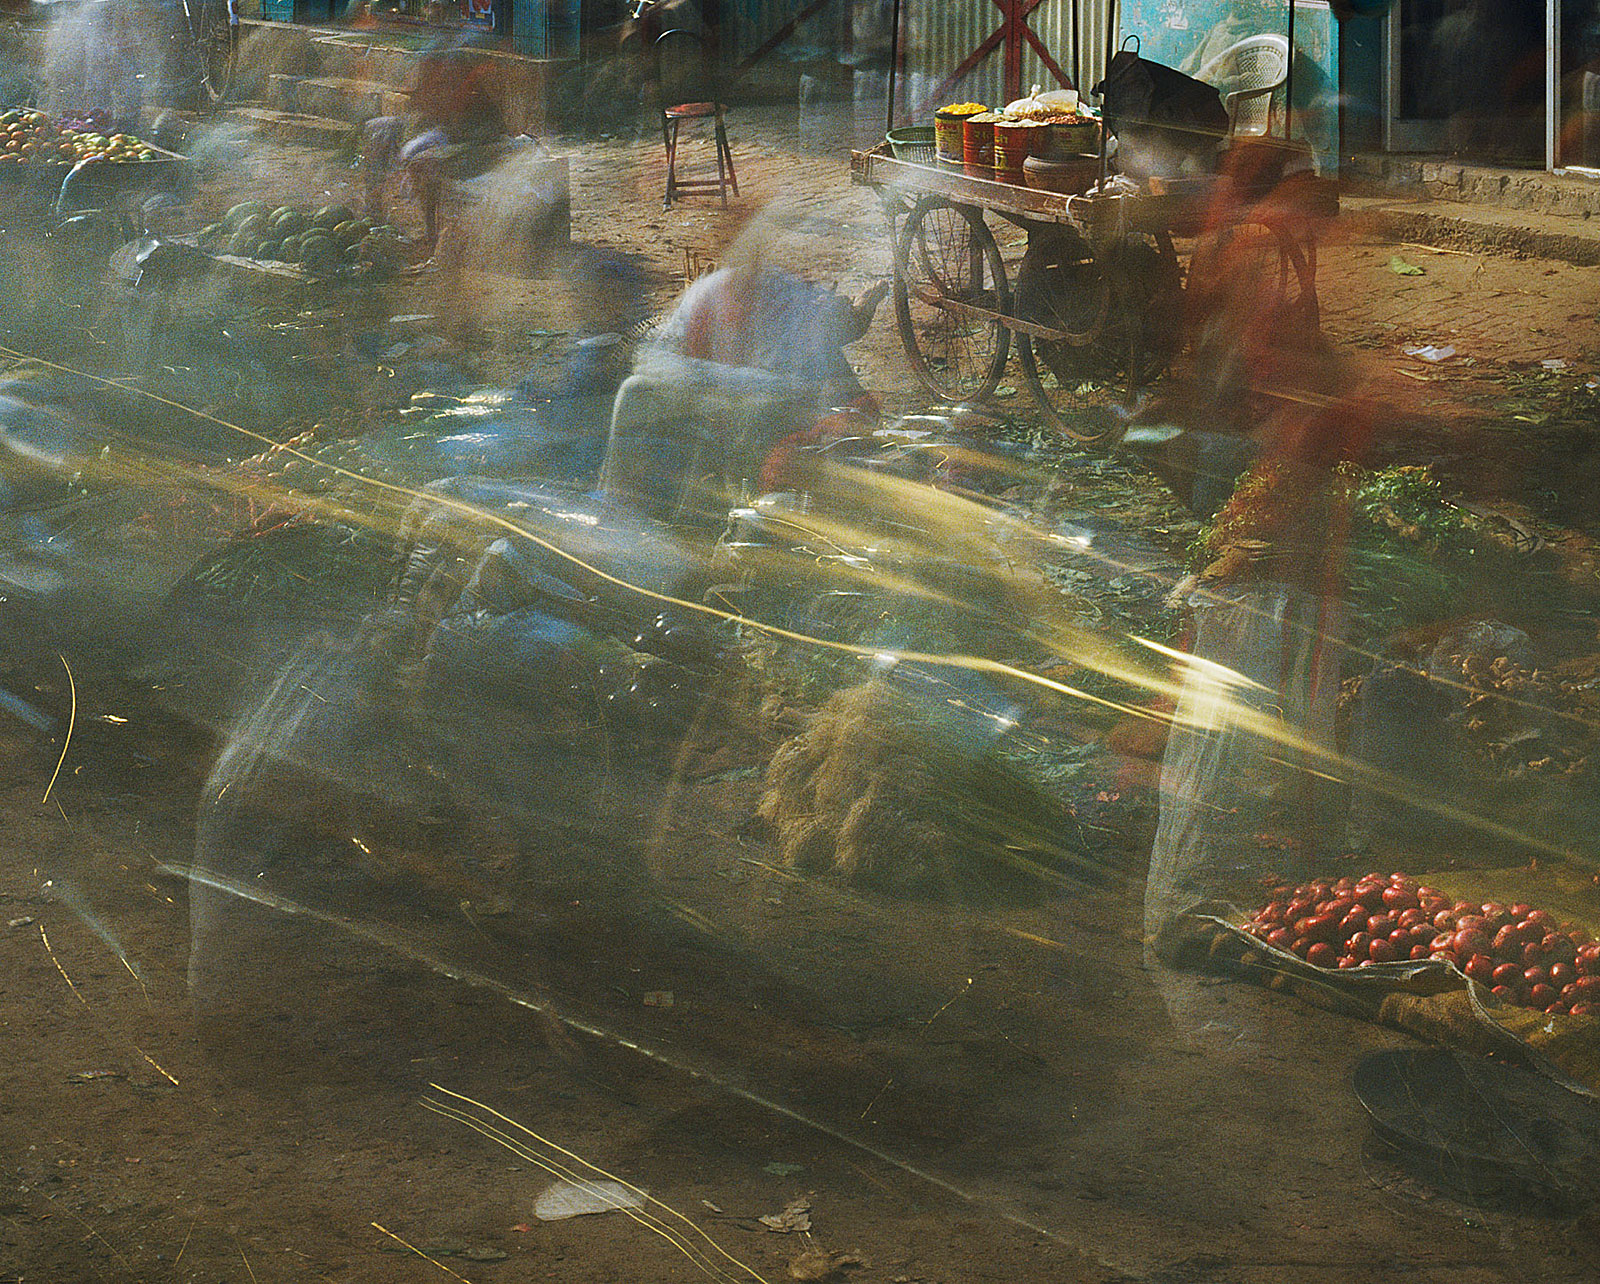 Street Market, Varanasi, India (11.03 - 11.08 Uhr, 2.1.2006)